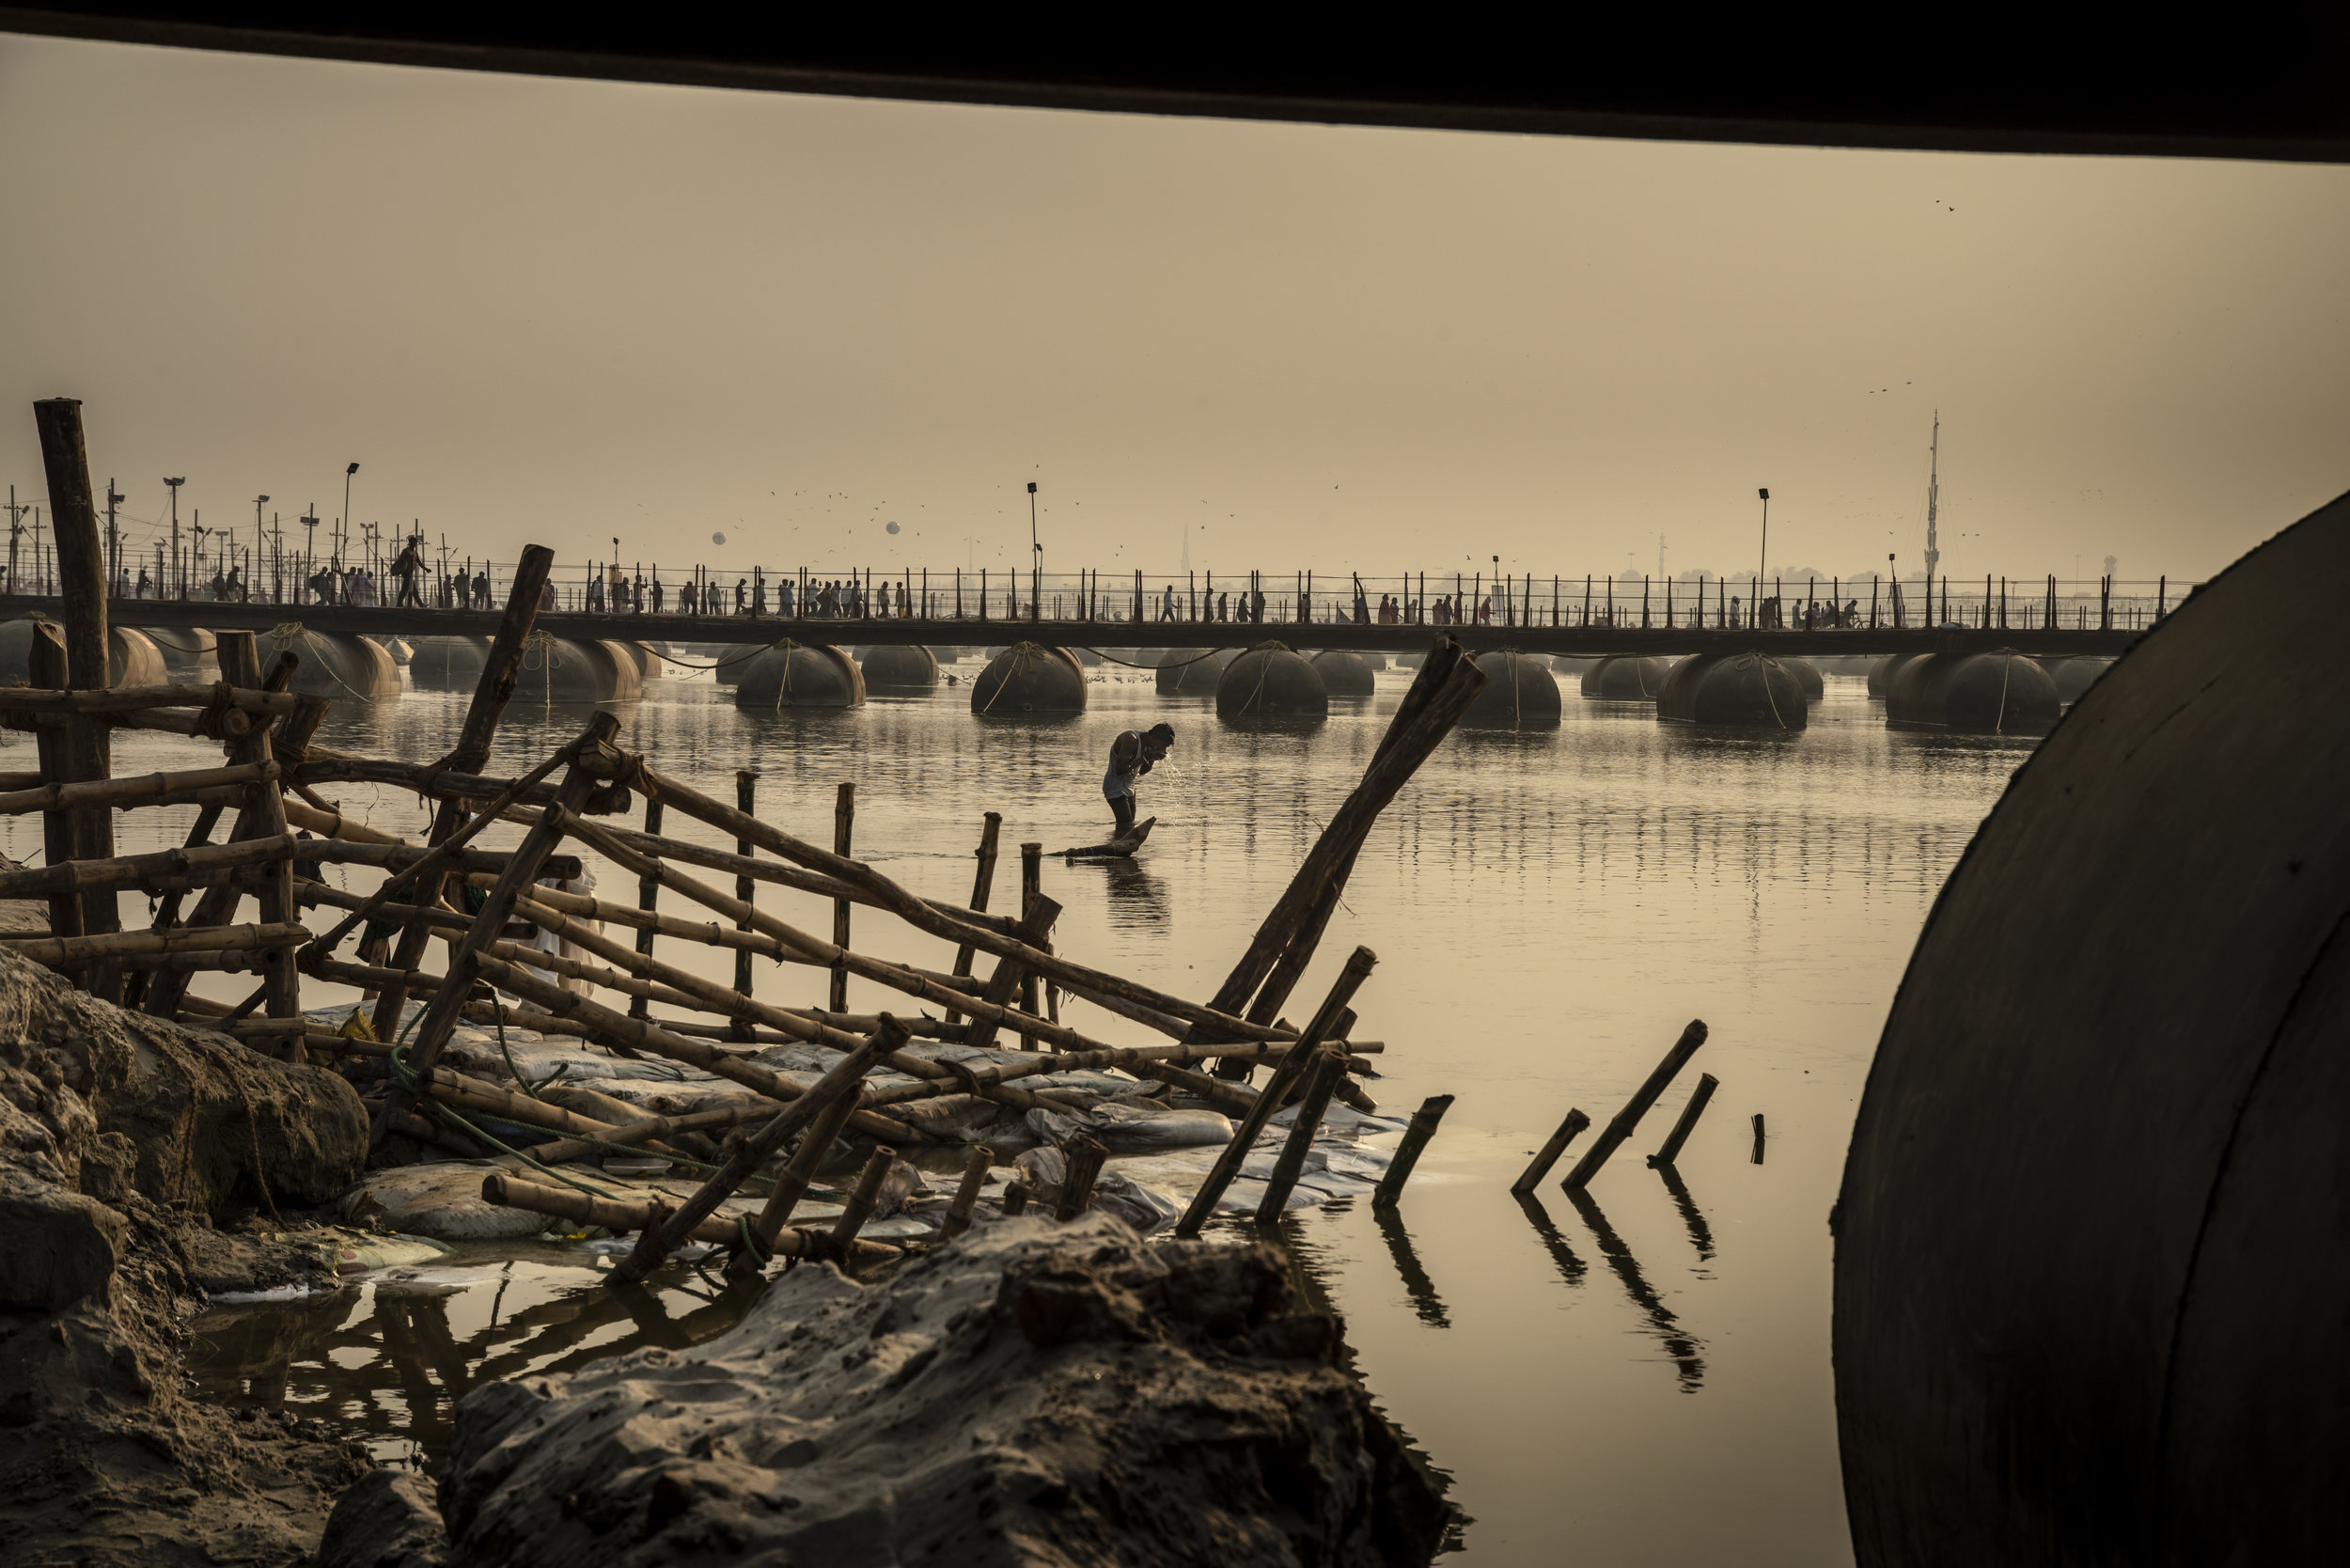  Man bathes in the Ganges betweenba series of temporary bridges 